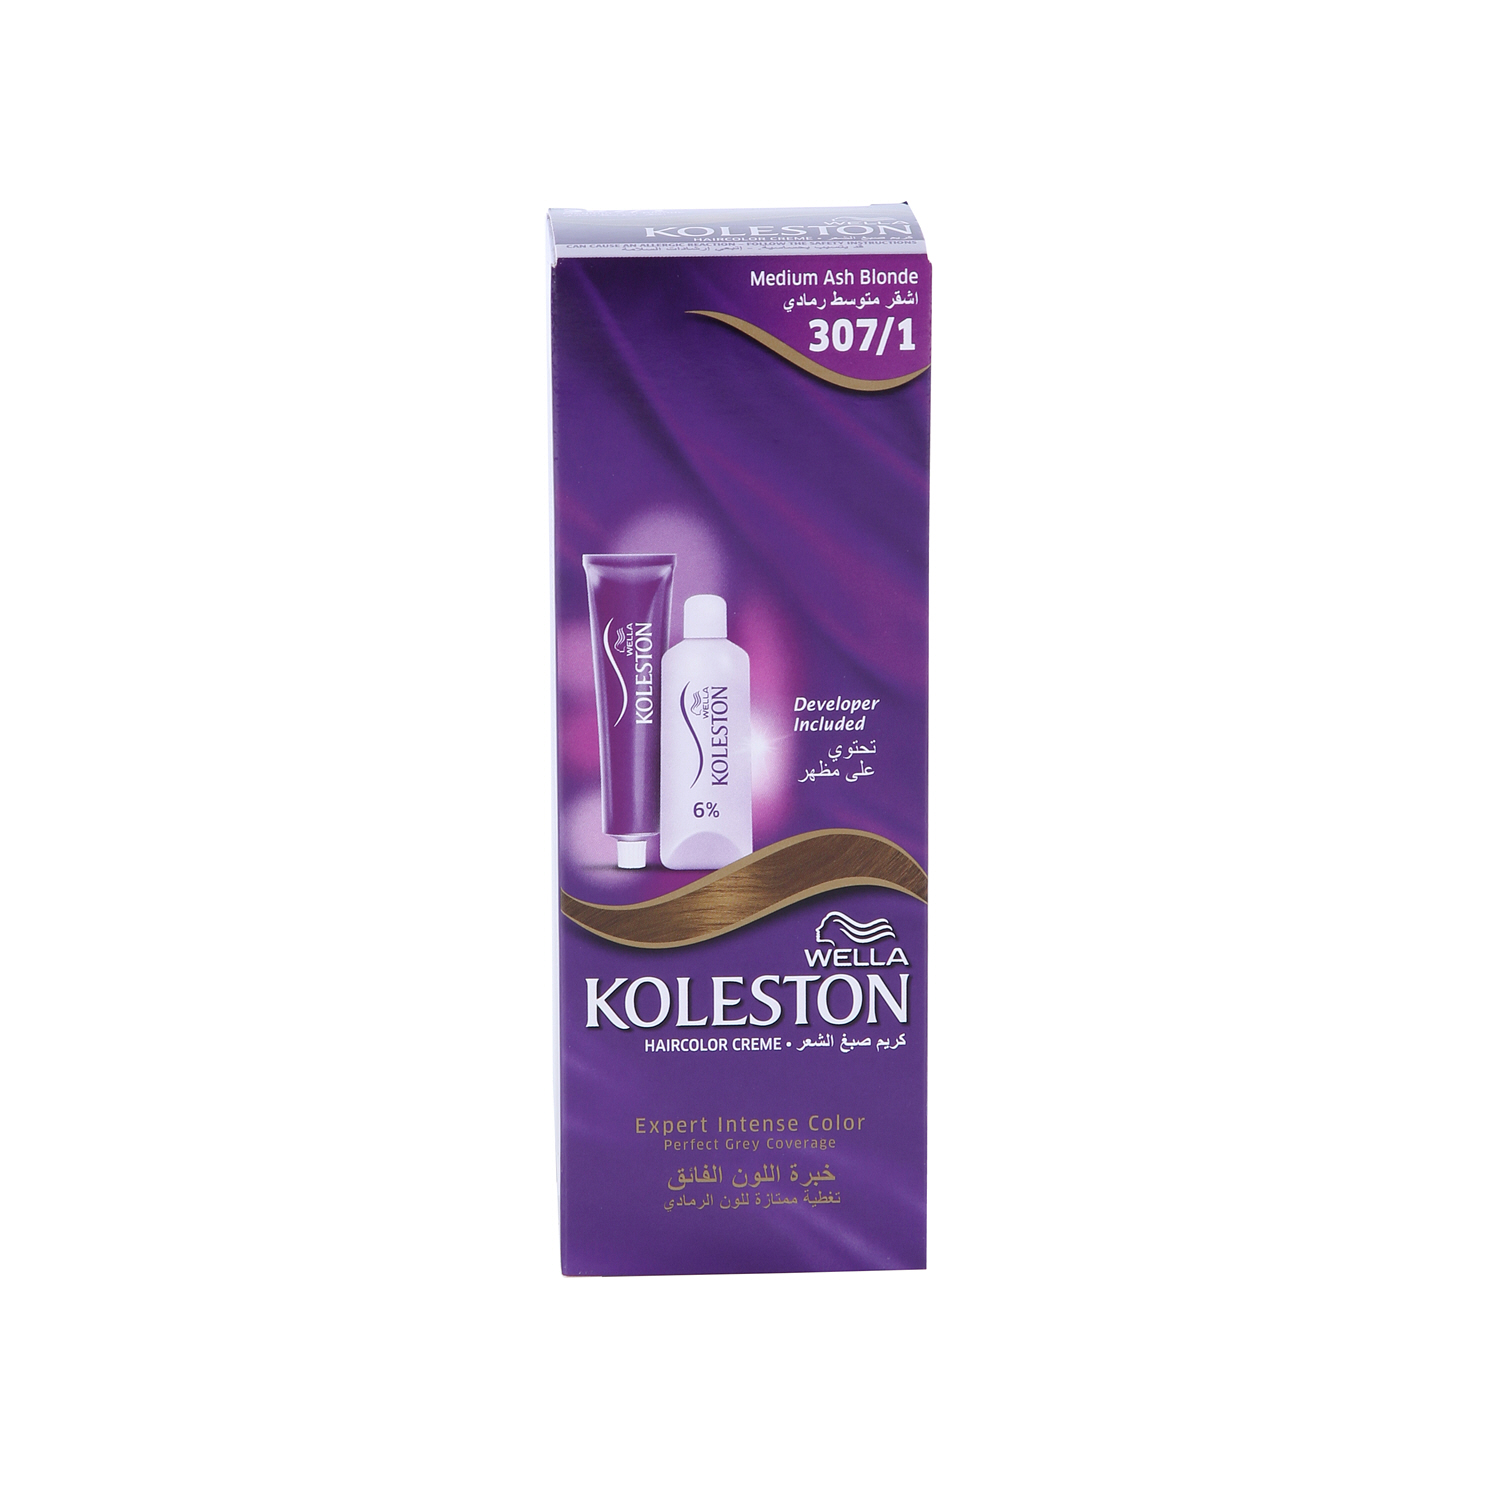 Wella Koleston Intense Hair Color 307/1 Medium Ash Blonde